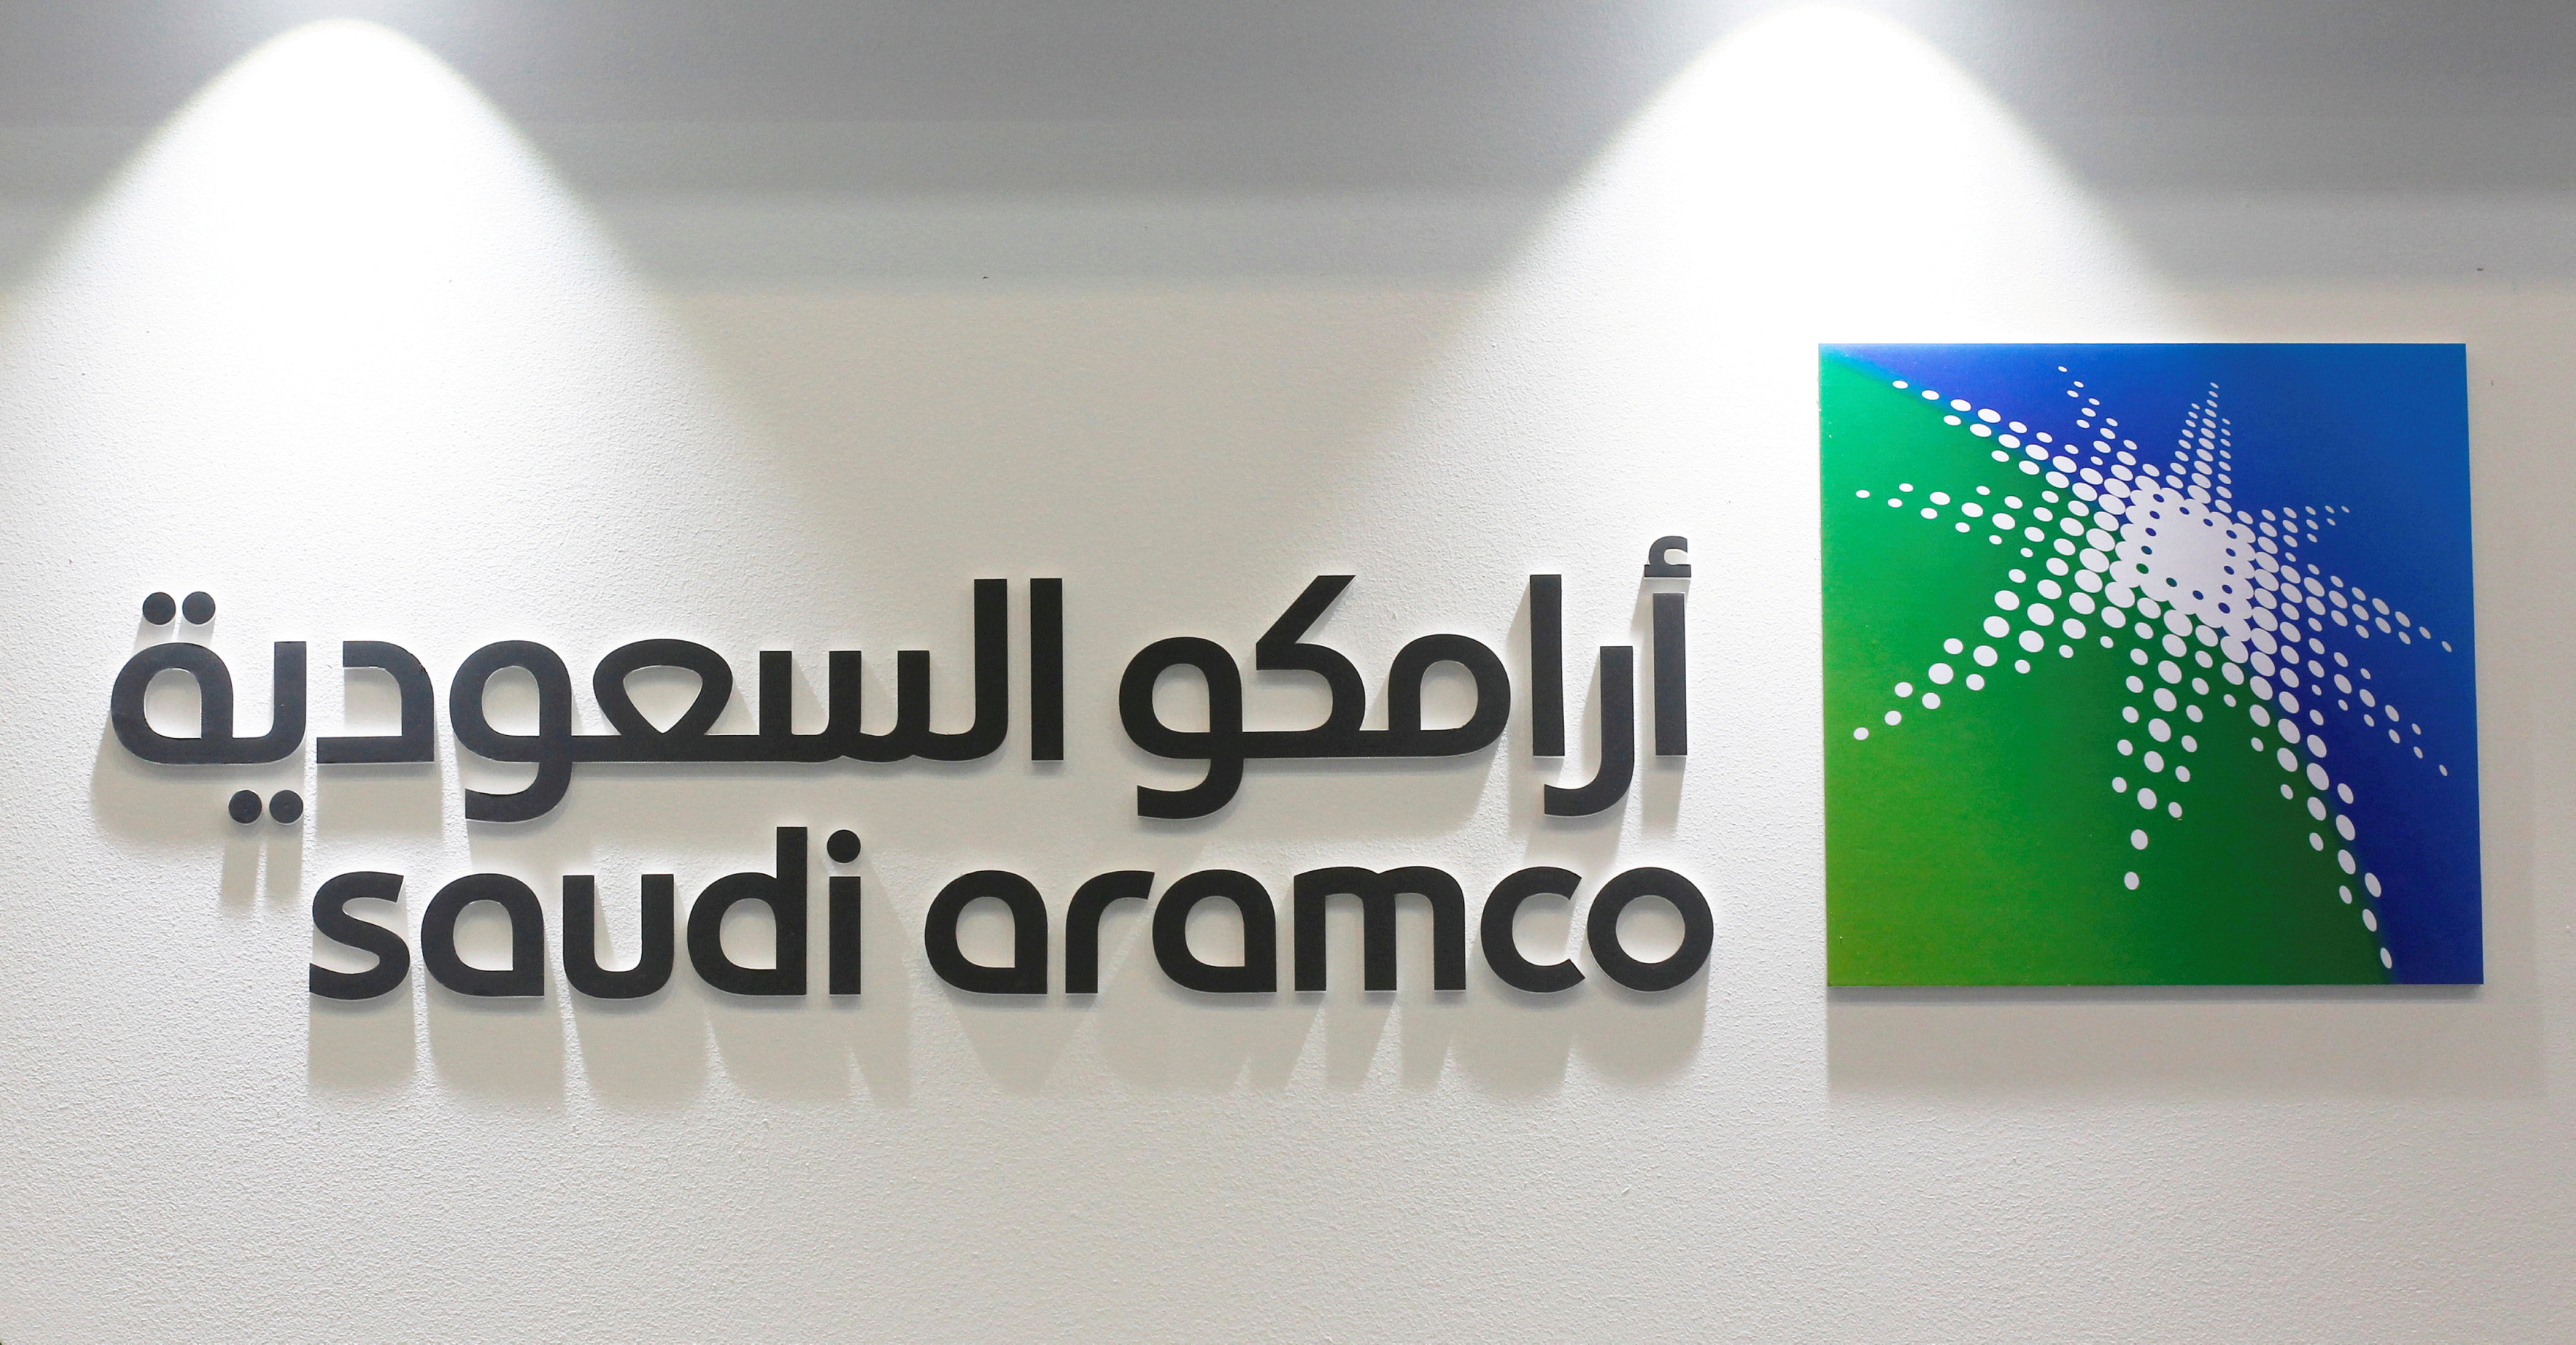 Russia may back Saudi Aramco IPO, enhance Opec ties